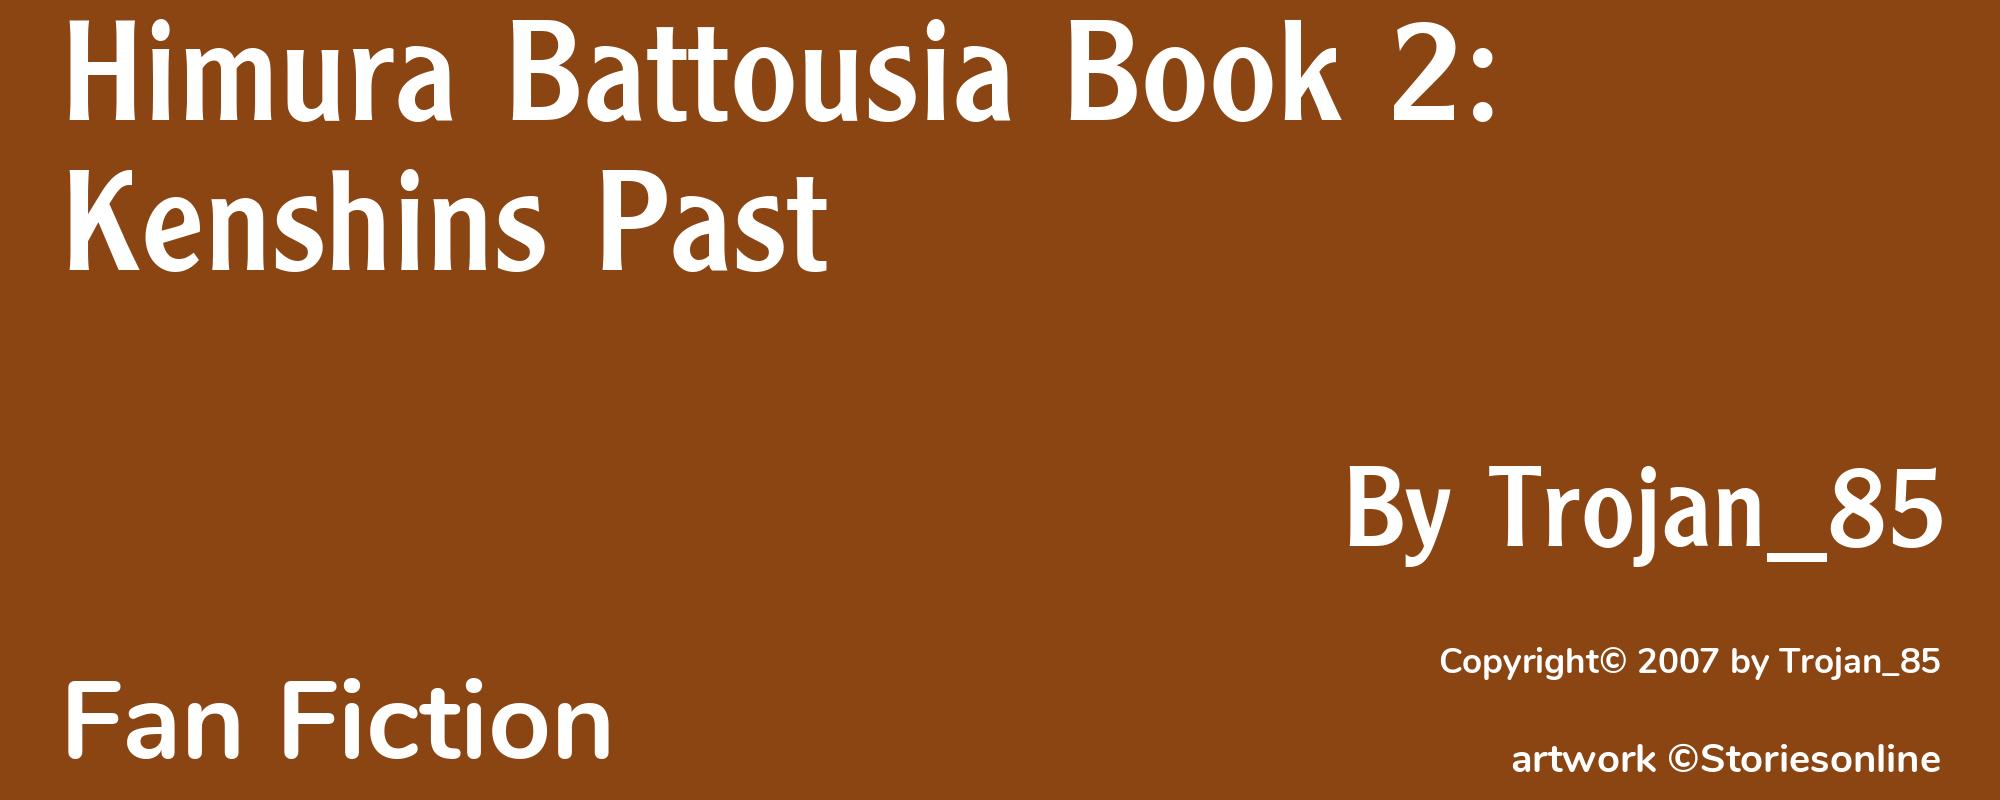 Himura Battousia Book 2: Kenshins Past - Cover